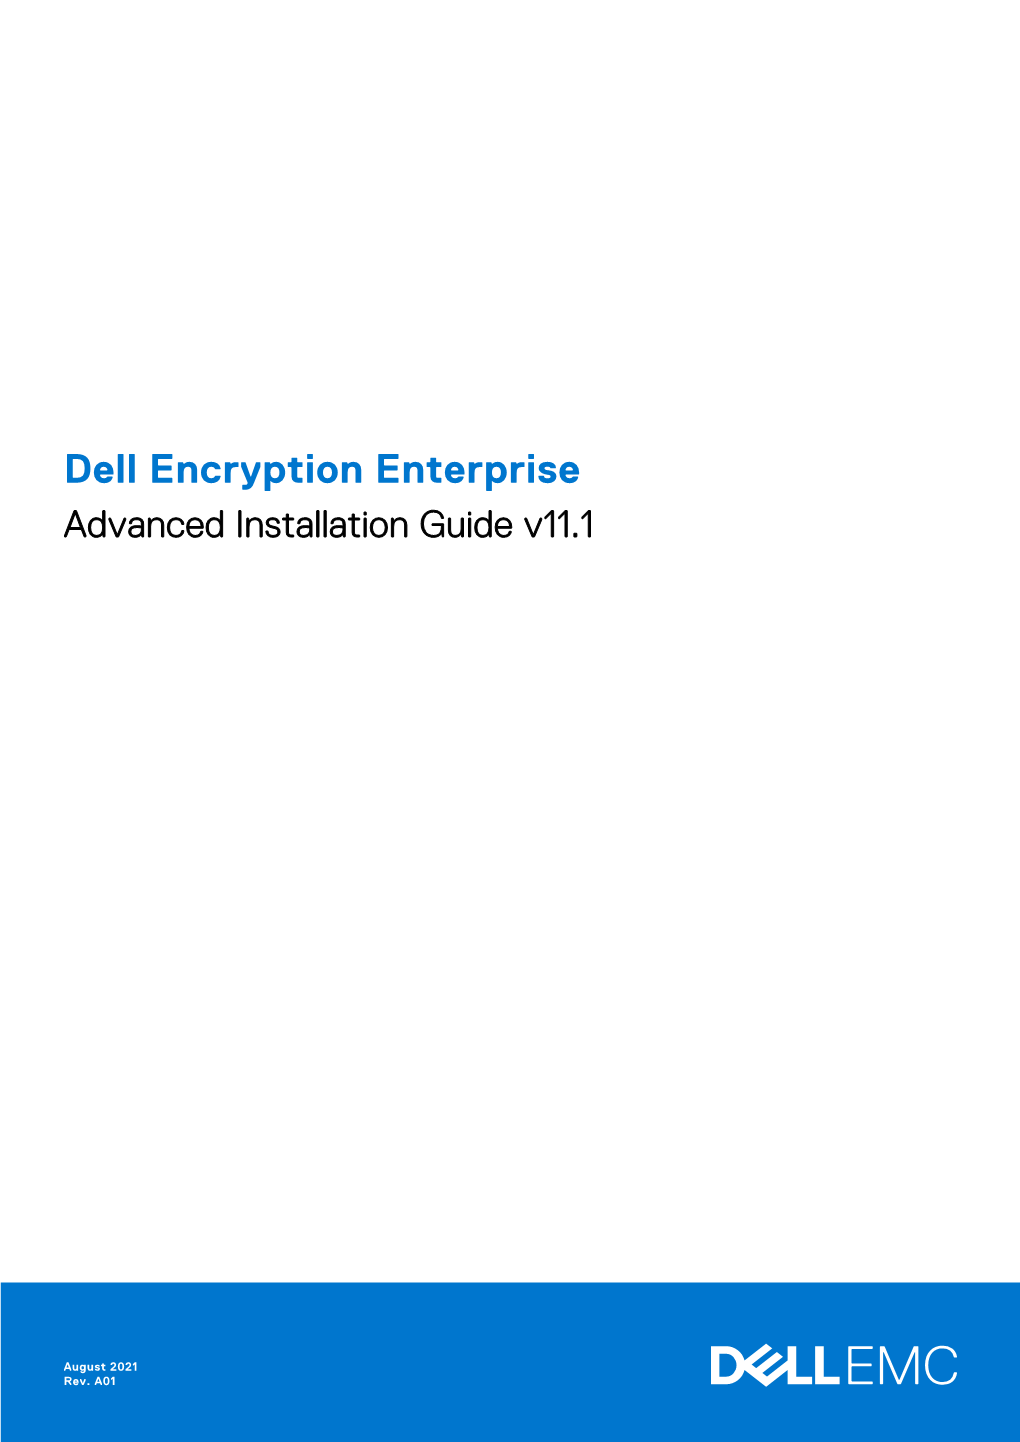 Dell Encryption Enterprise Advanced Installation Guide V11.0